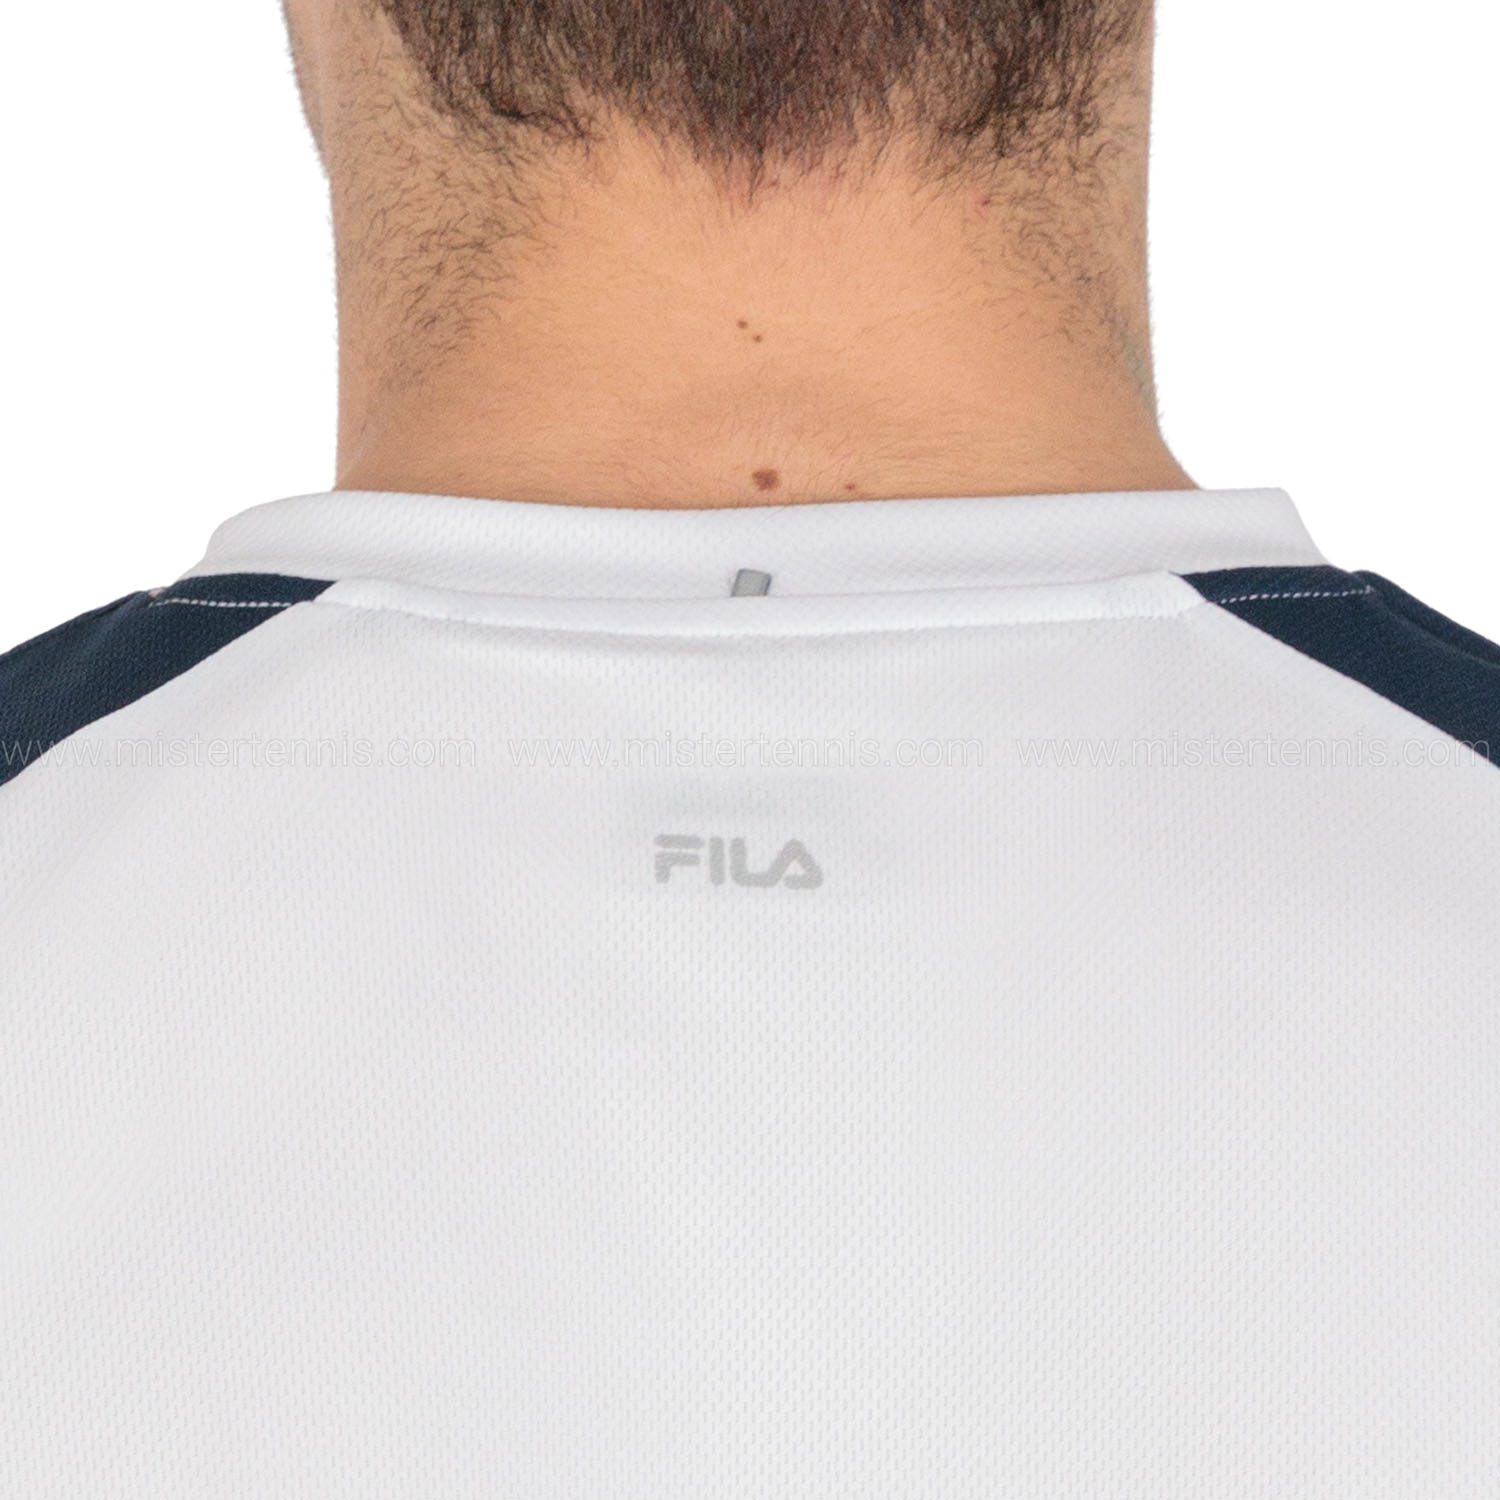 Fila Alfie Camiseta - White/Peacoat Blue